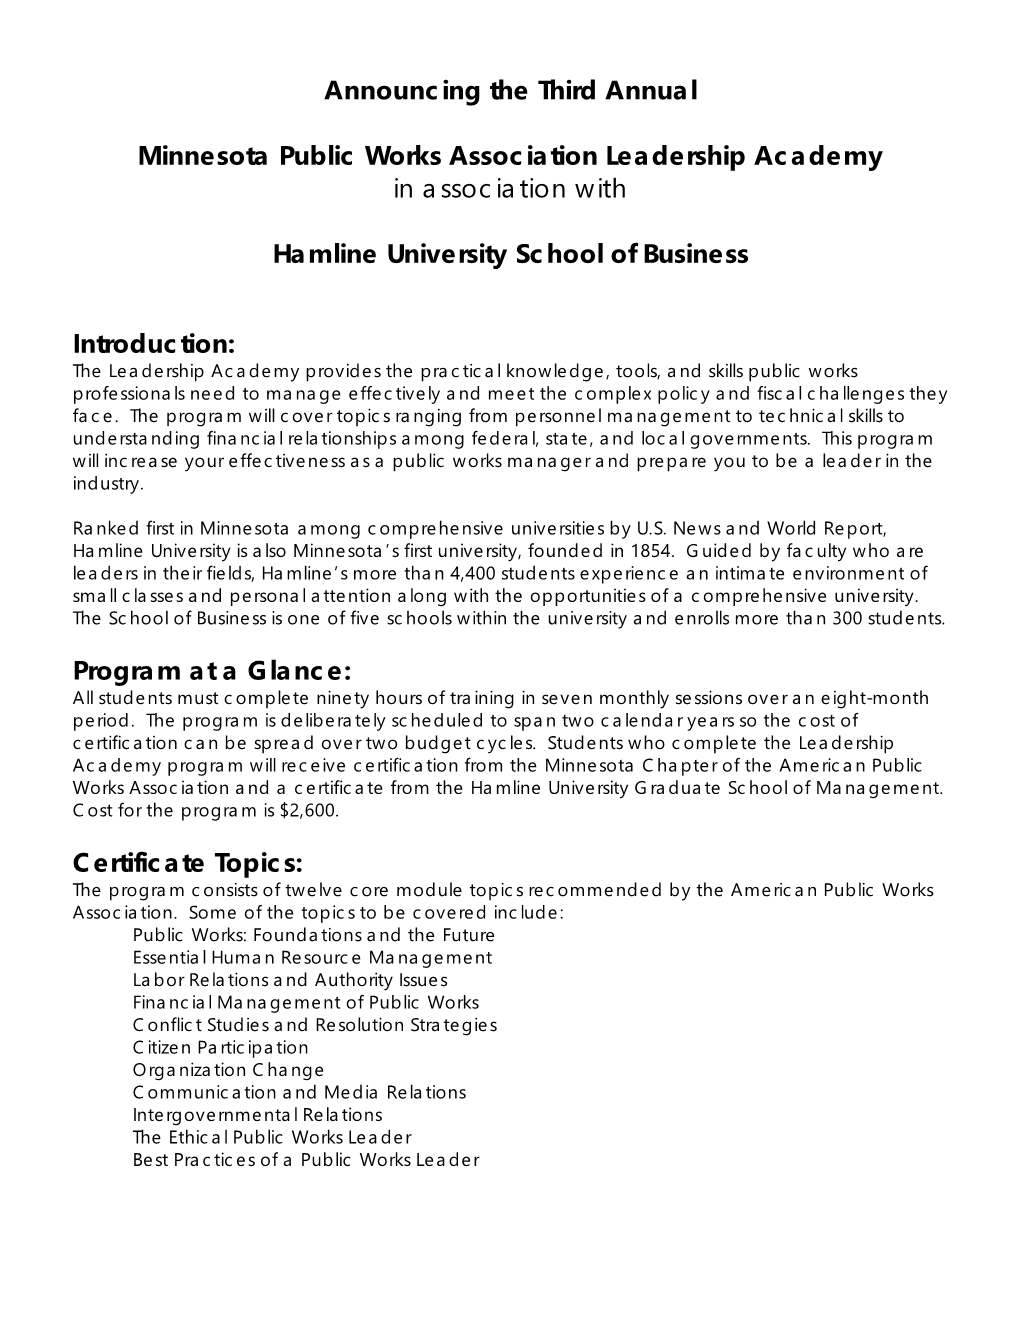 Minnesota Public Works Association Leadership Academy in Association With